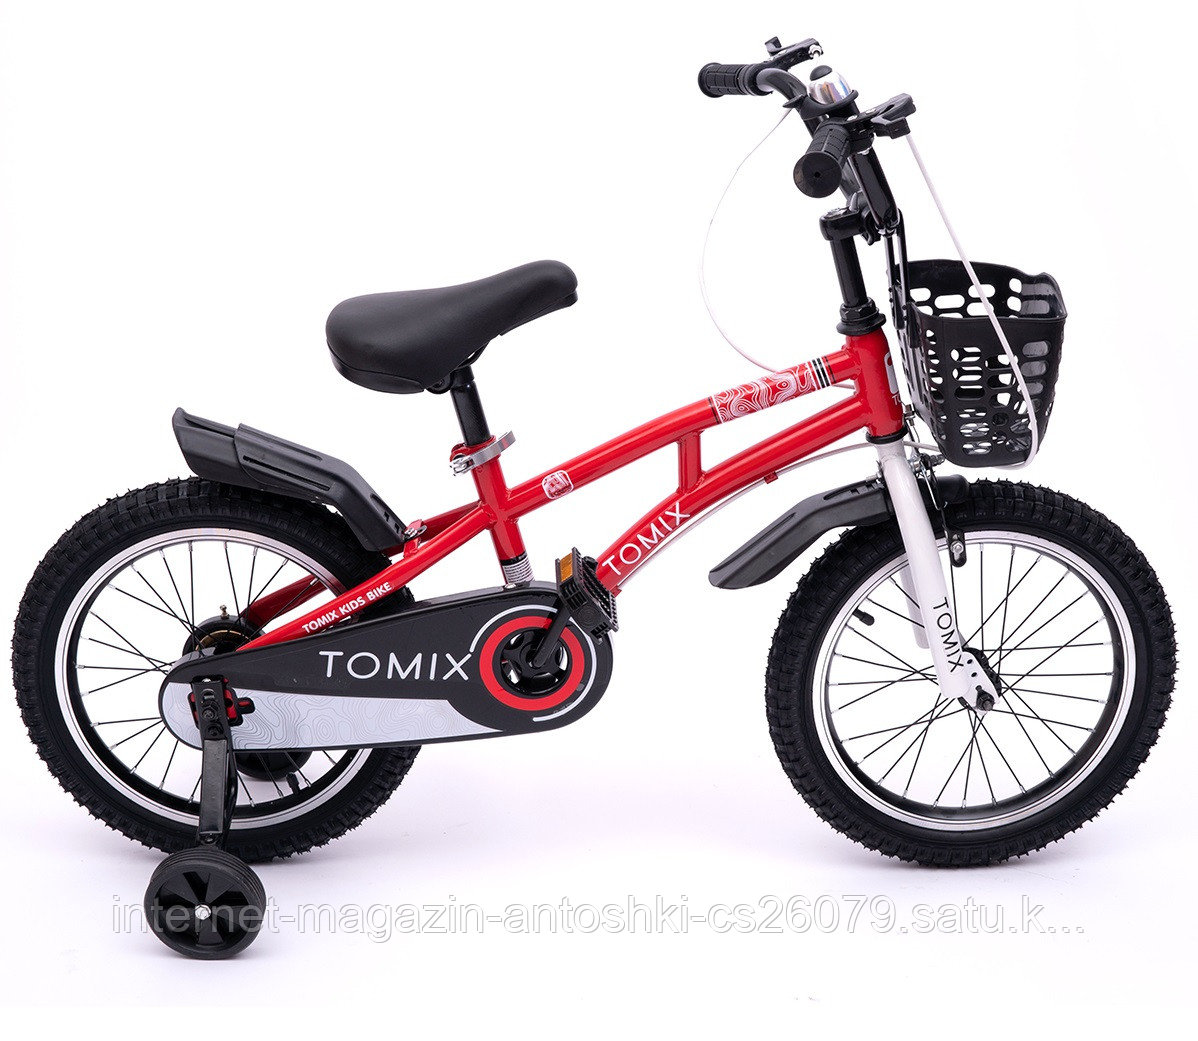 Детский велосипед TOMIX " Whirly 16", Red, диаметр колес 16 дюймов (40 см), от 4 до 6 лет, в комп